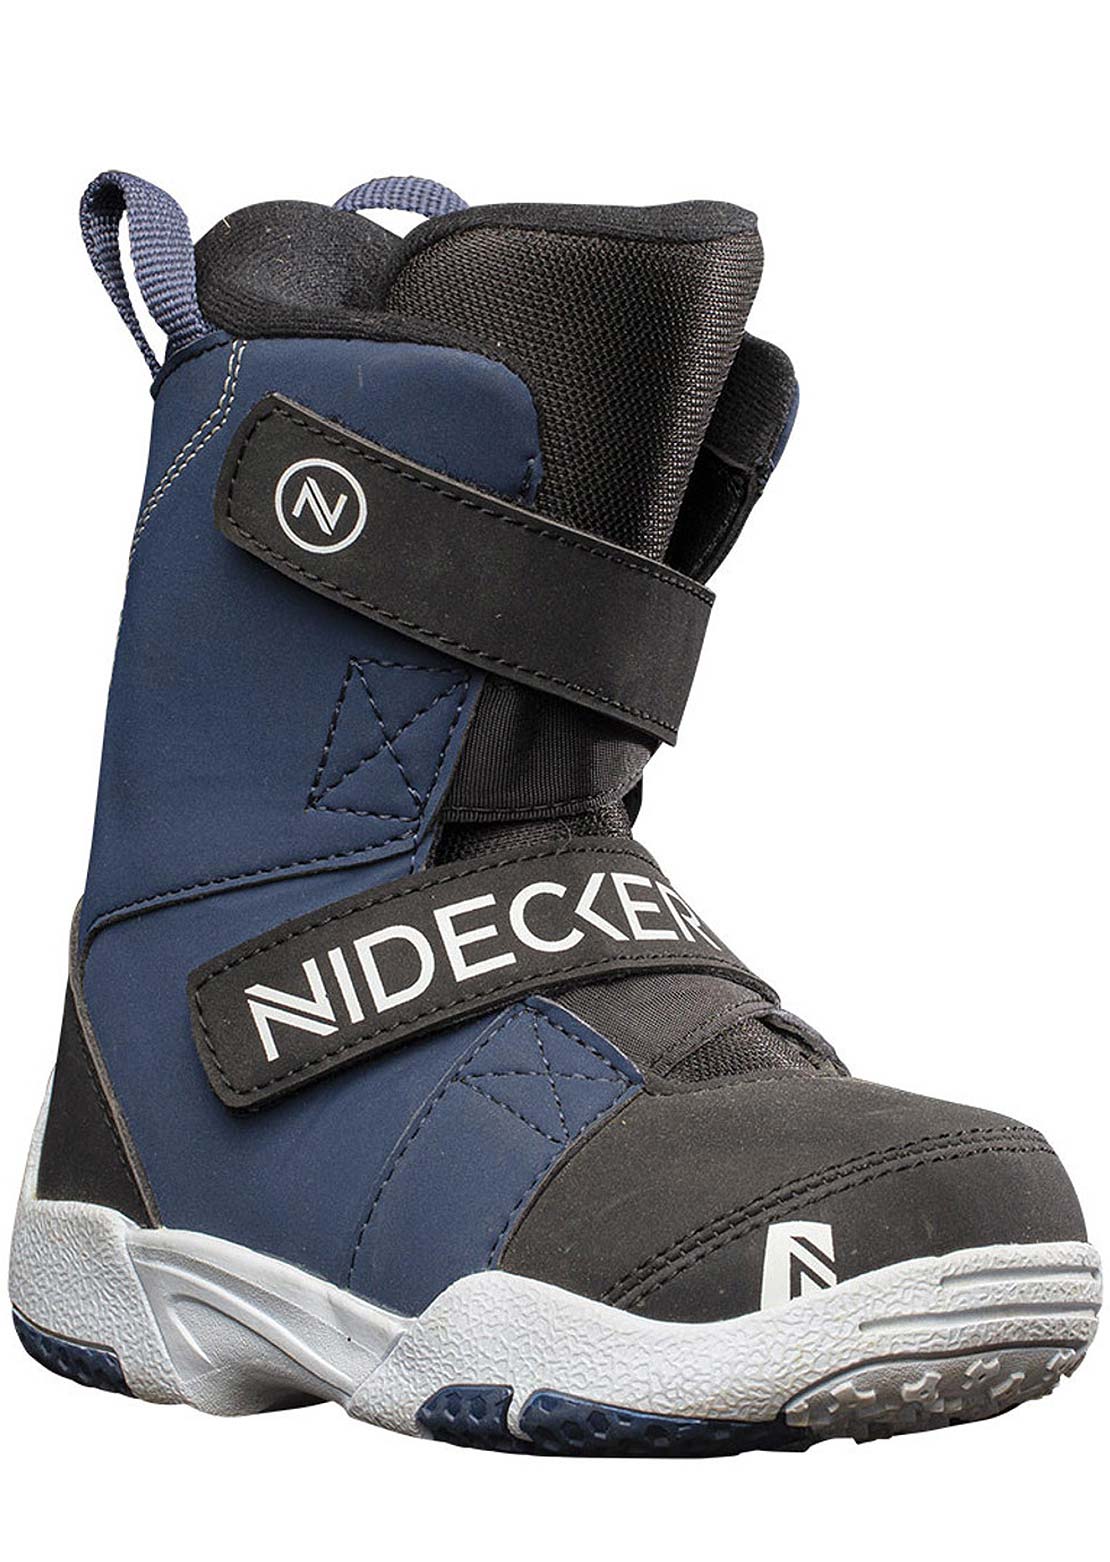 Nidecker Micron Mini Snow Boots Black